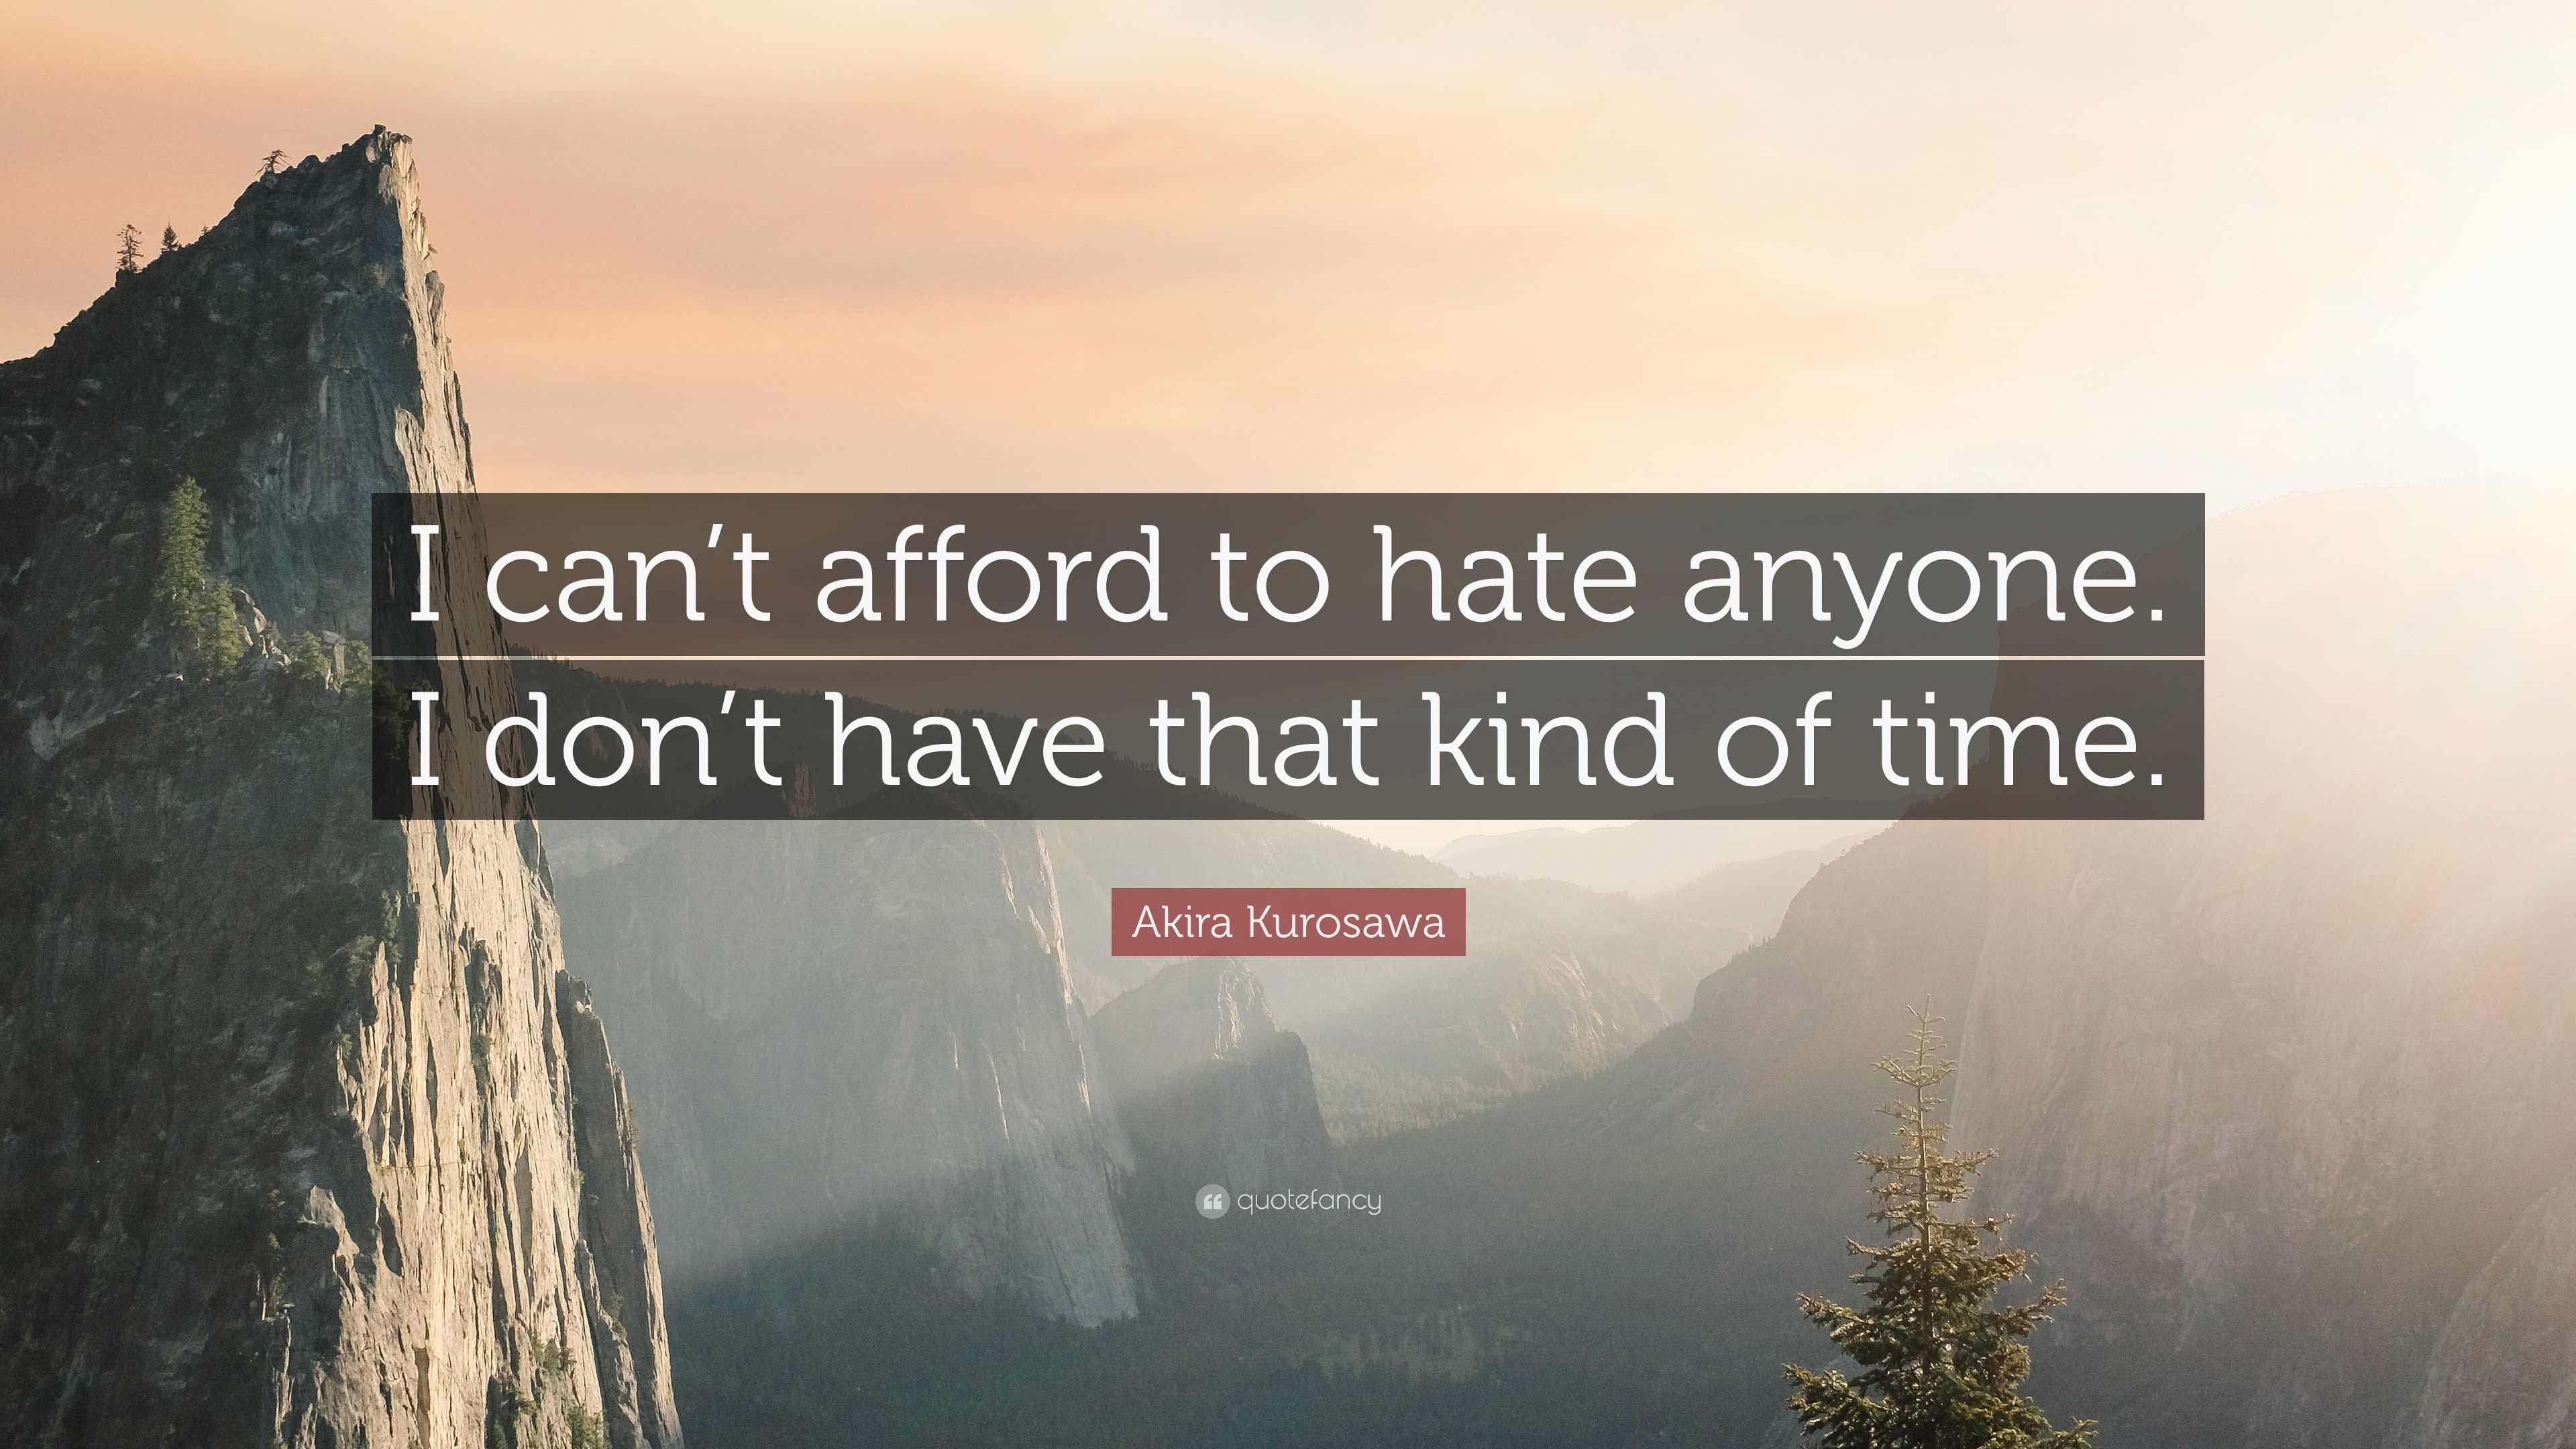 Akira Kurosawa Quote: "I can't afford to hate anyone. 